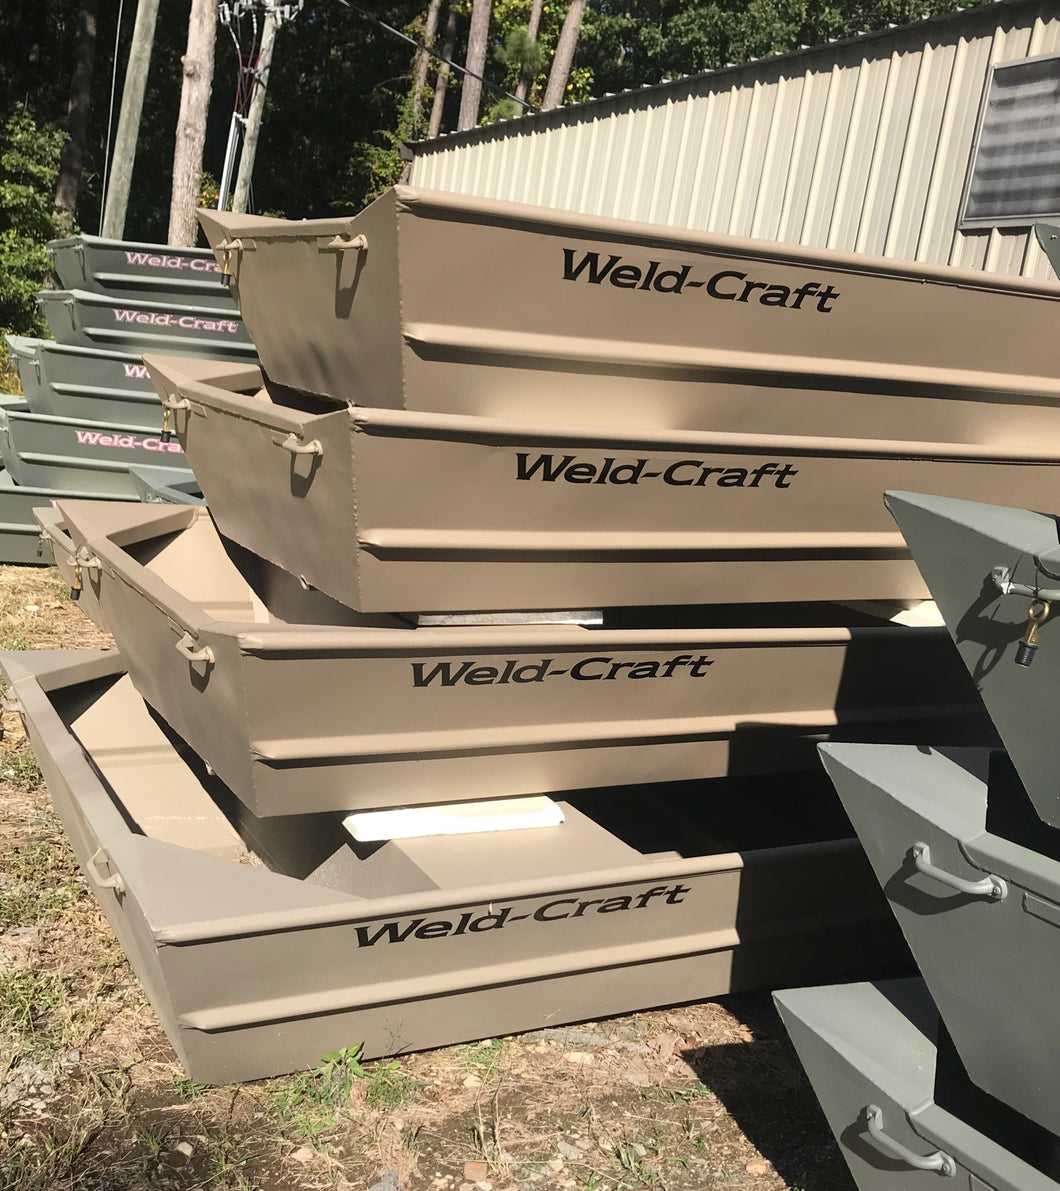 Weld-Craft Aluminum Boat Decal (set of 2)